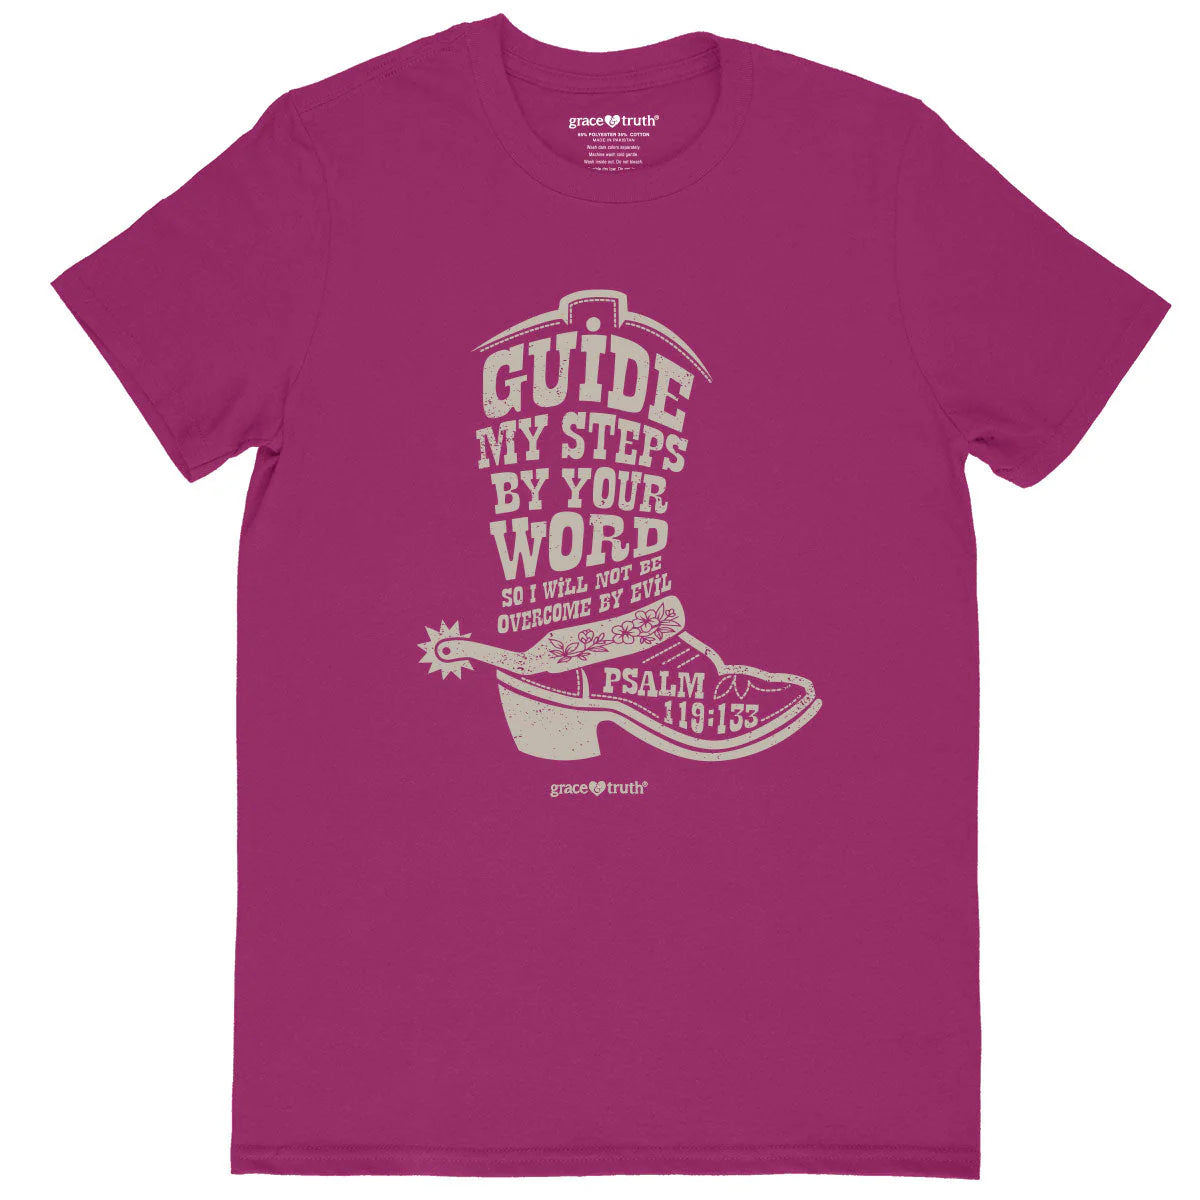 grace & truth Womens T-Shirt Cowboy Boot grace & truth® Apparel Short Sleeve T-shirts Women's